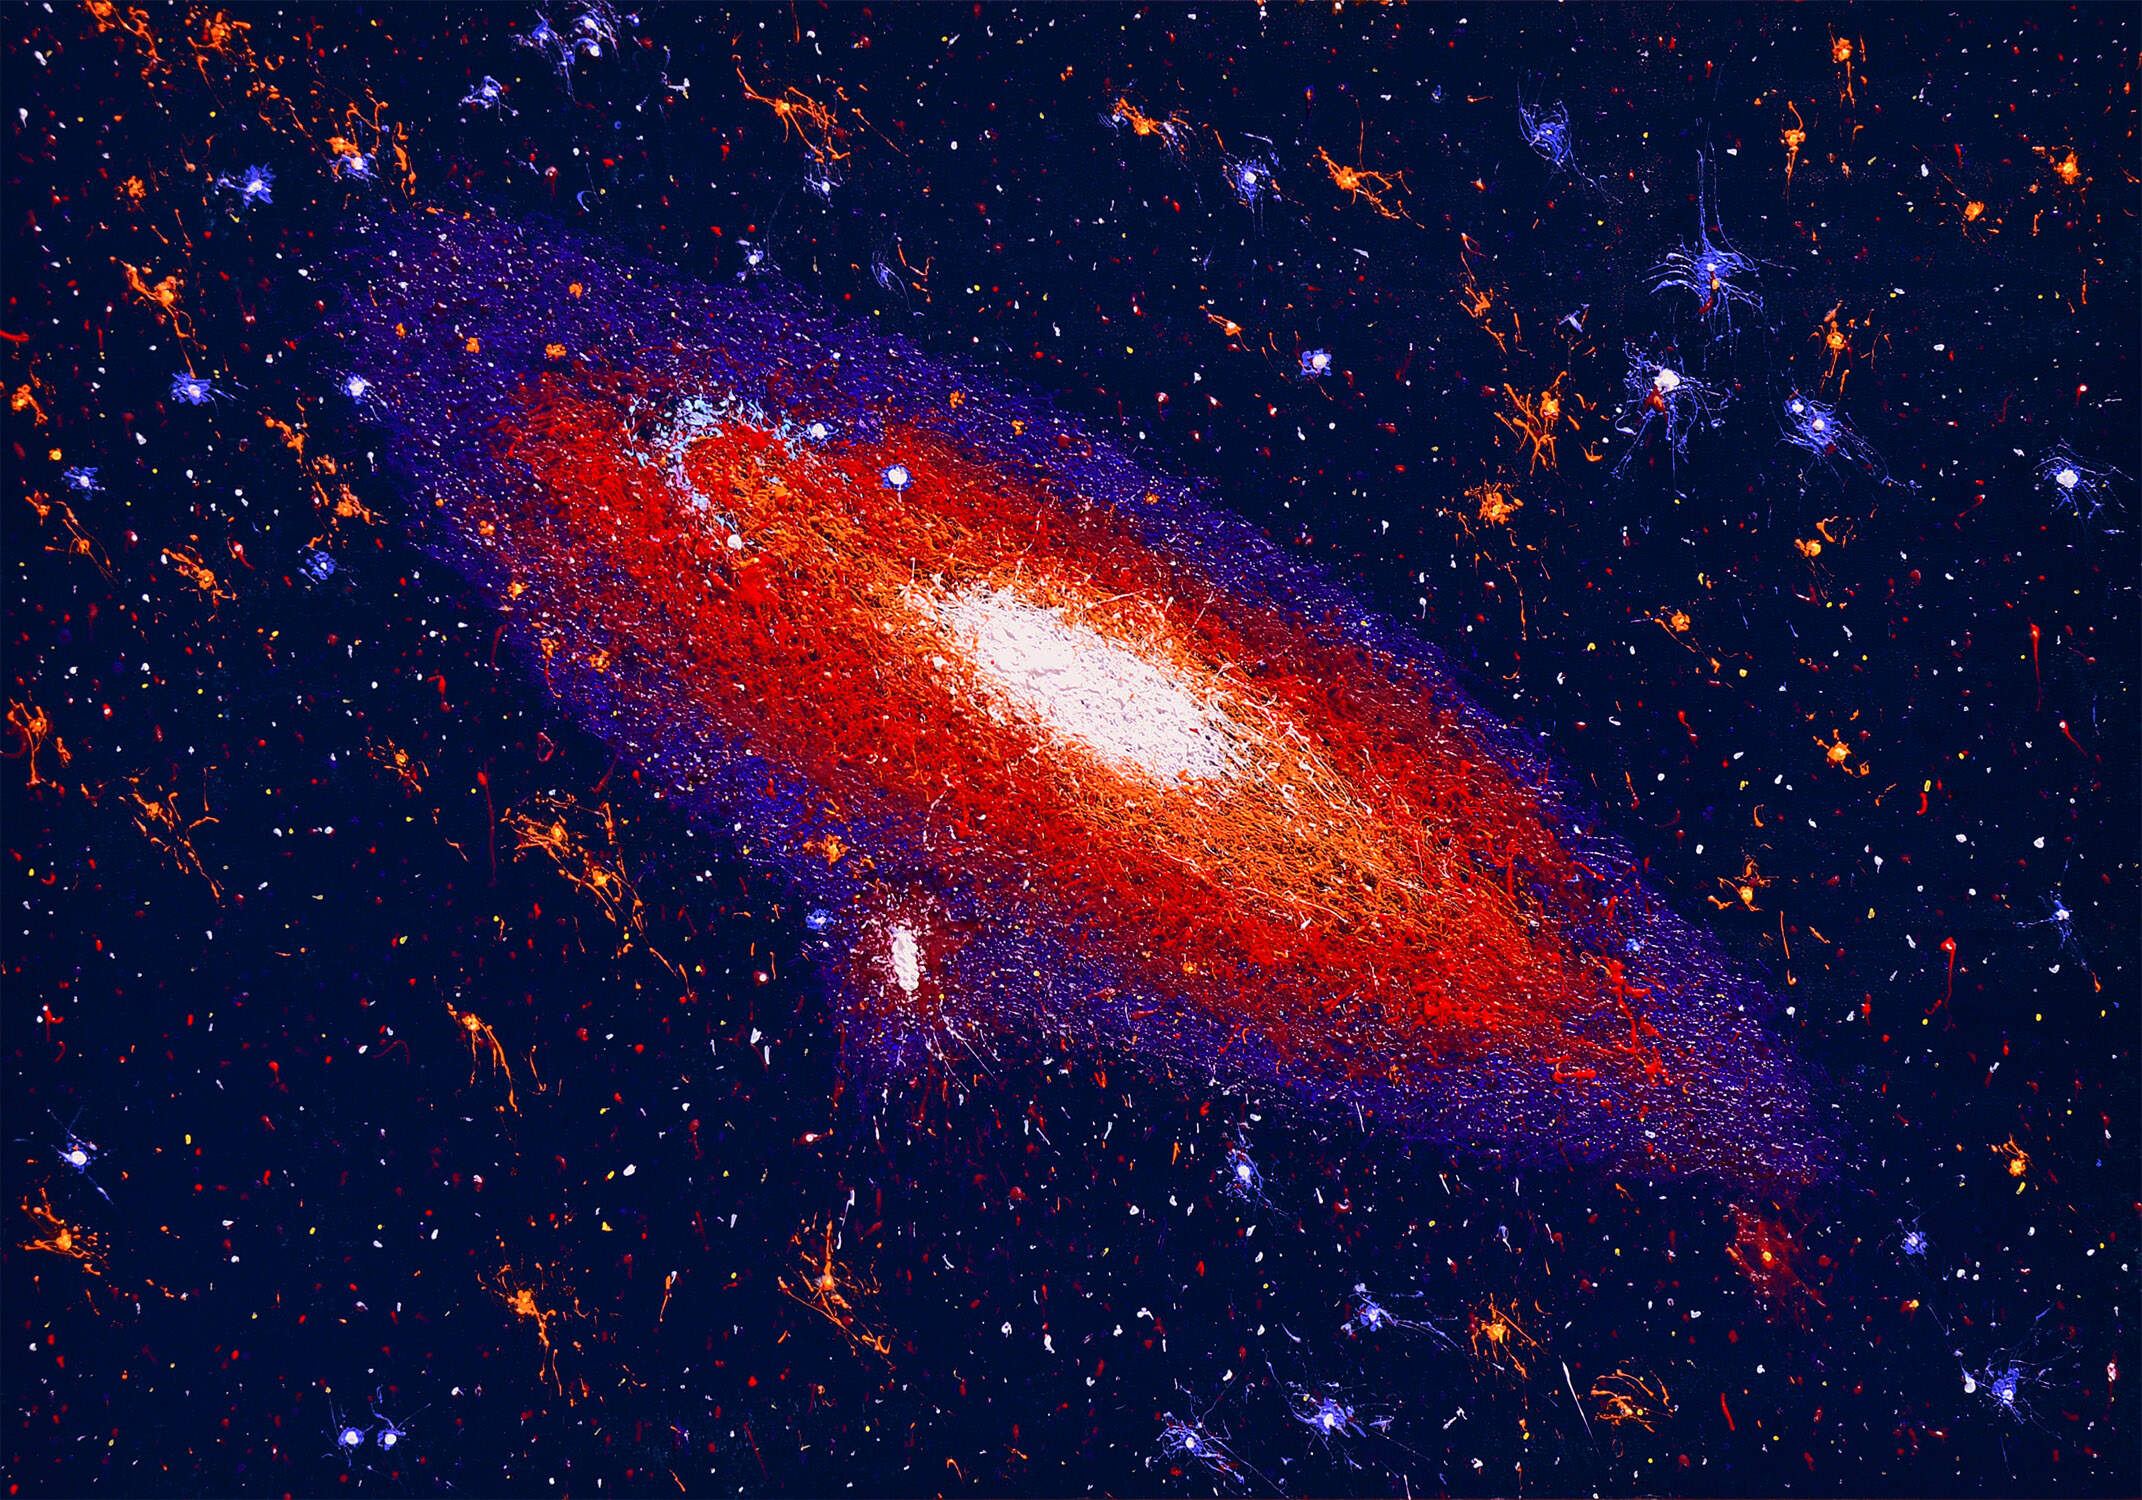 Galassia Andromeda